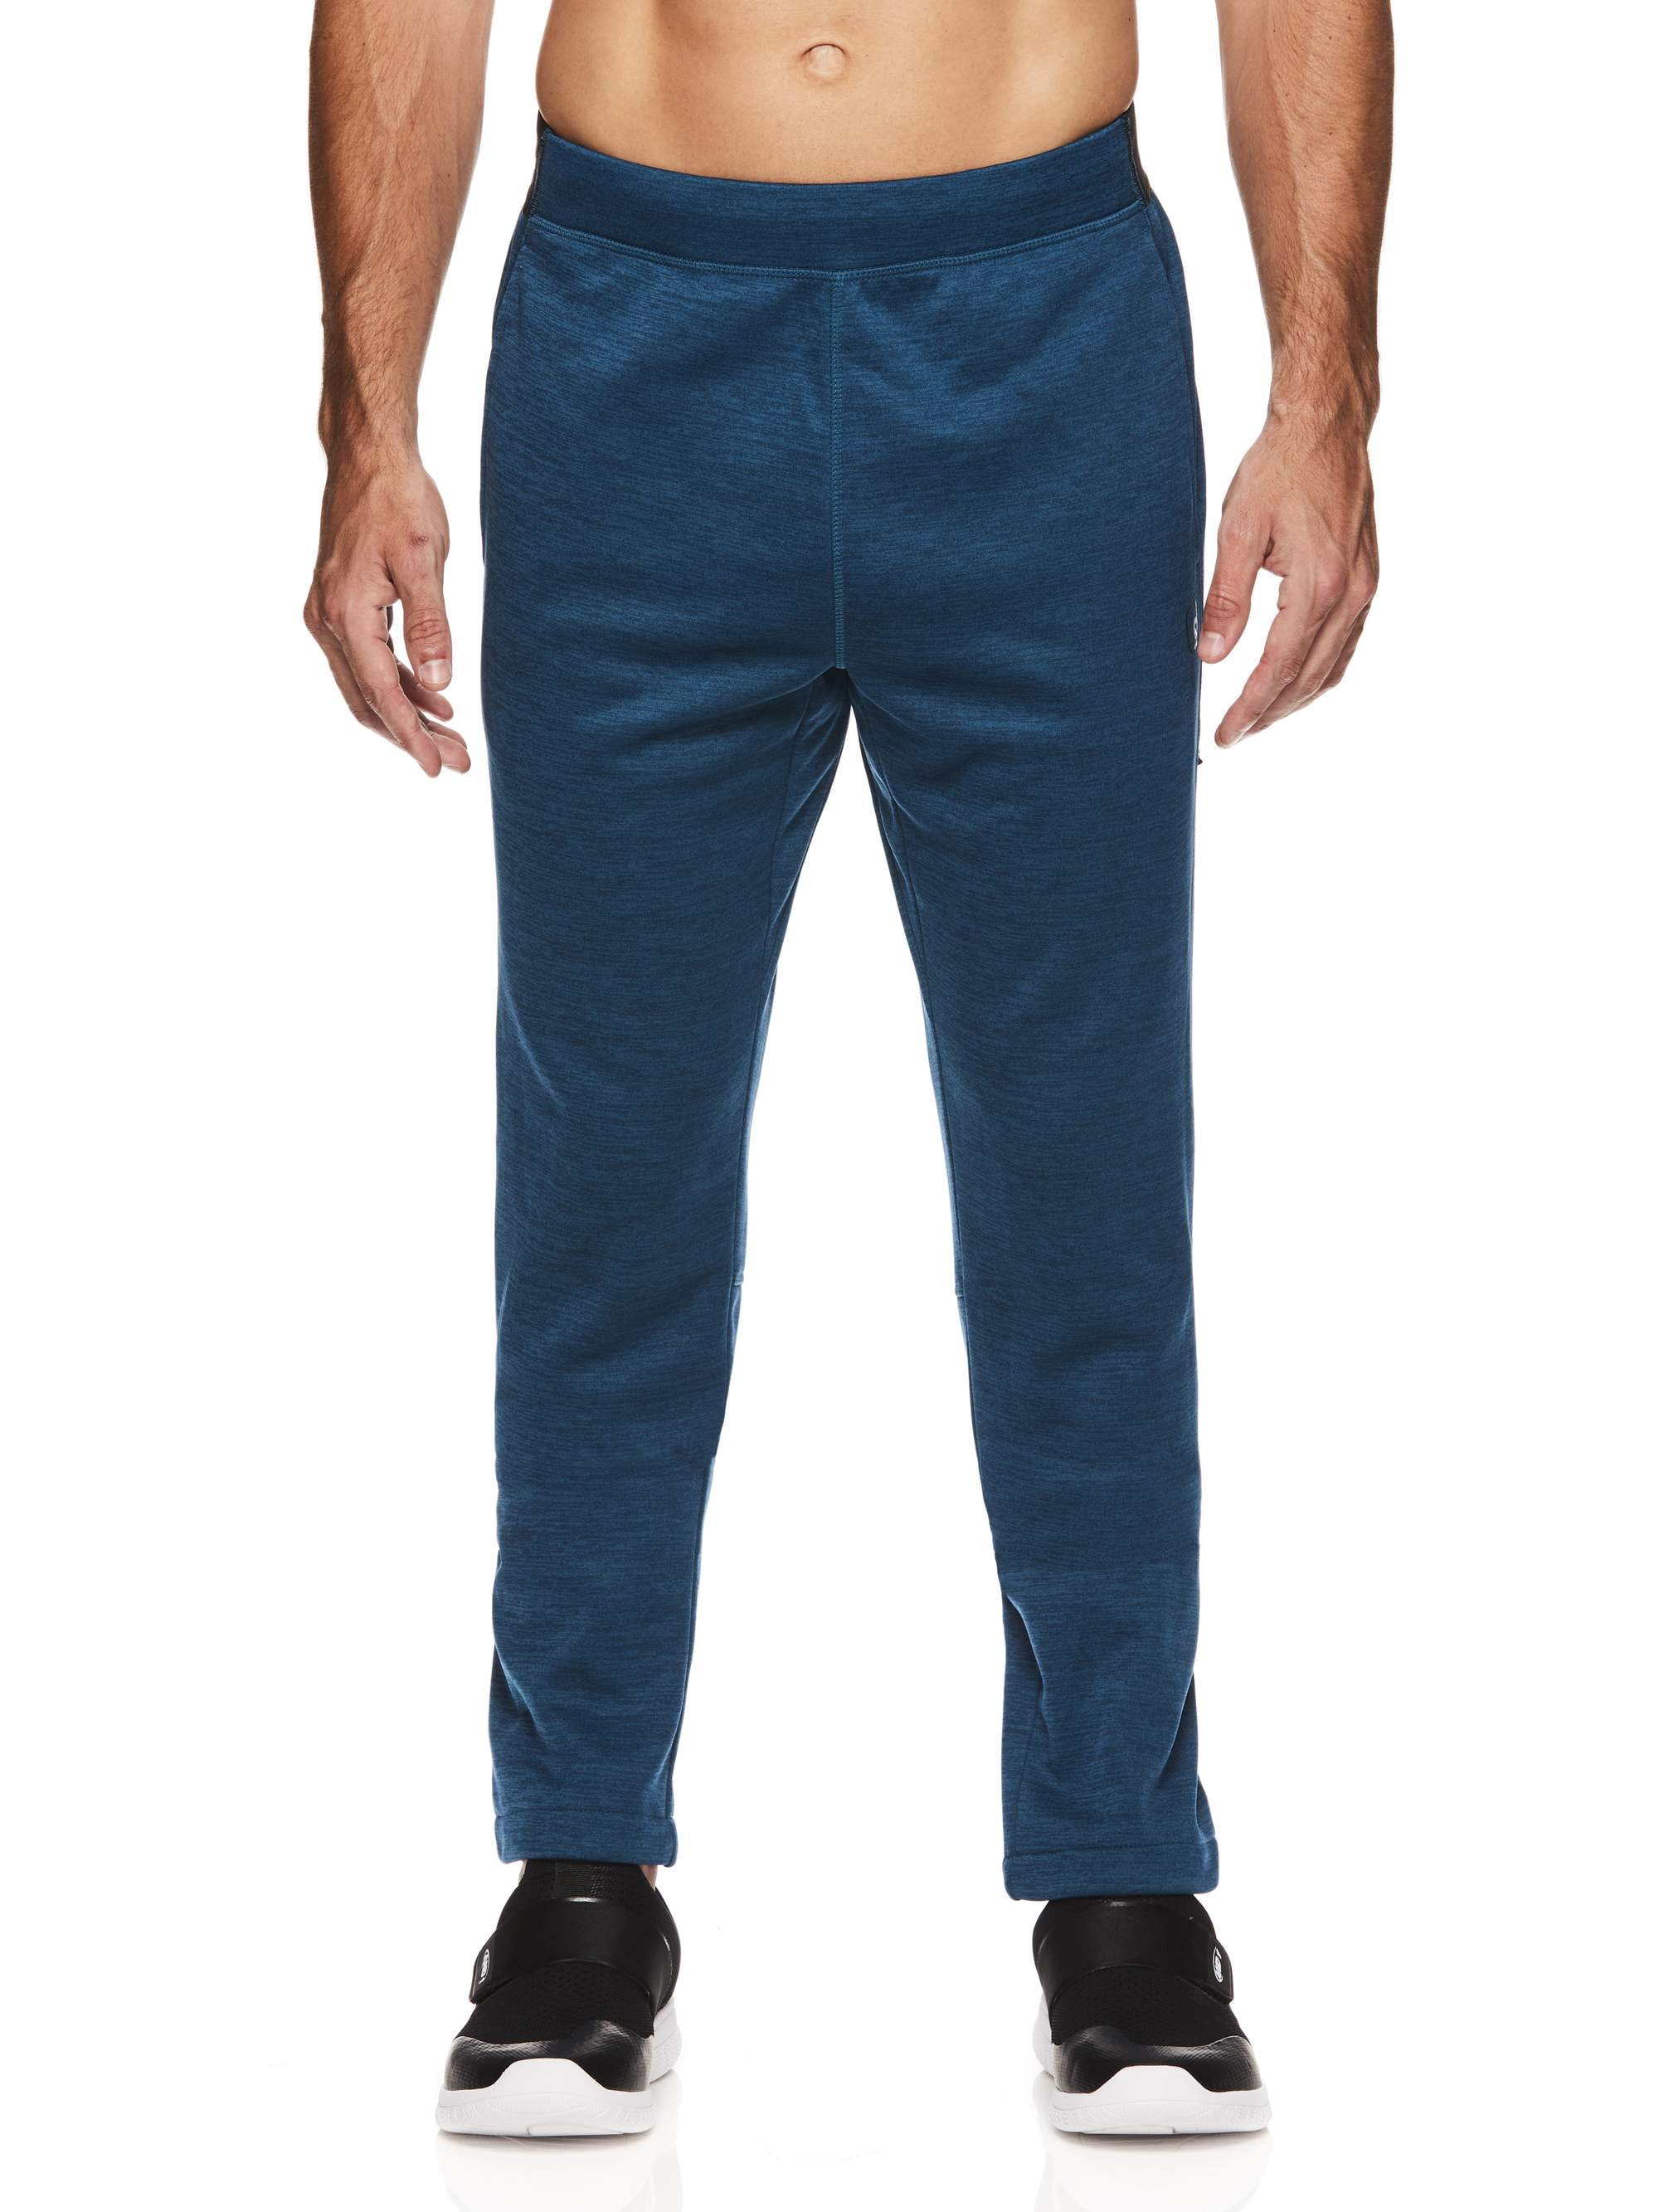 Ododos Blue Active Pants Size XL - 41% off